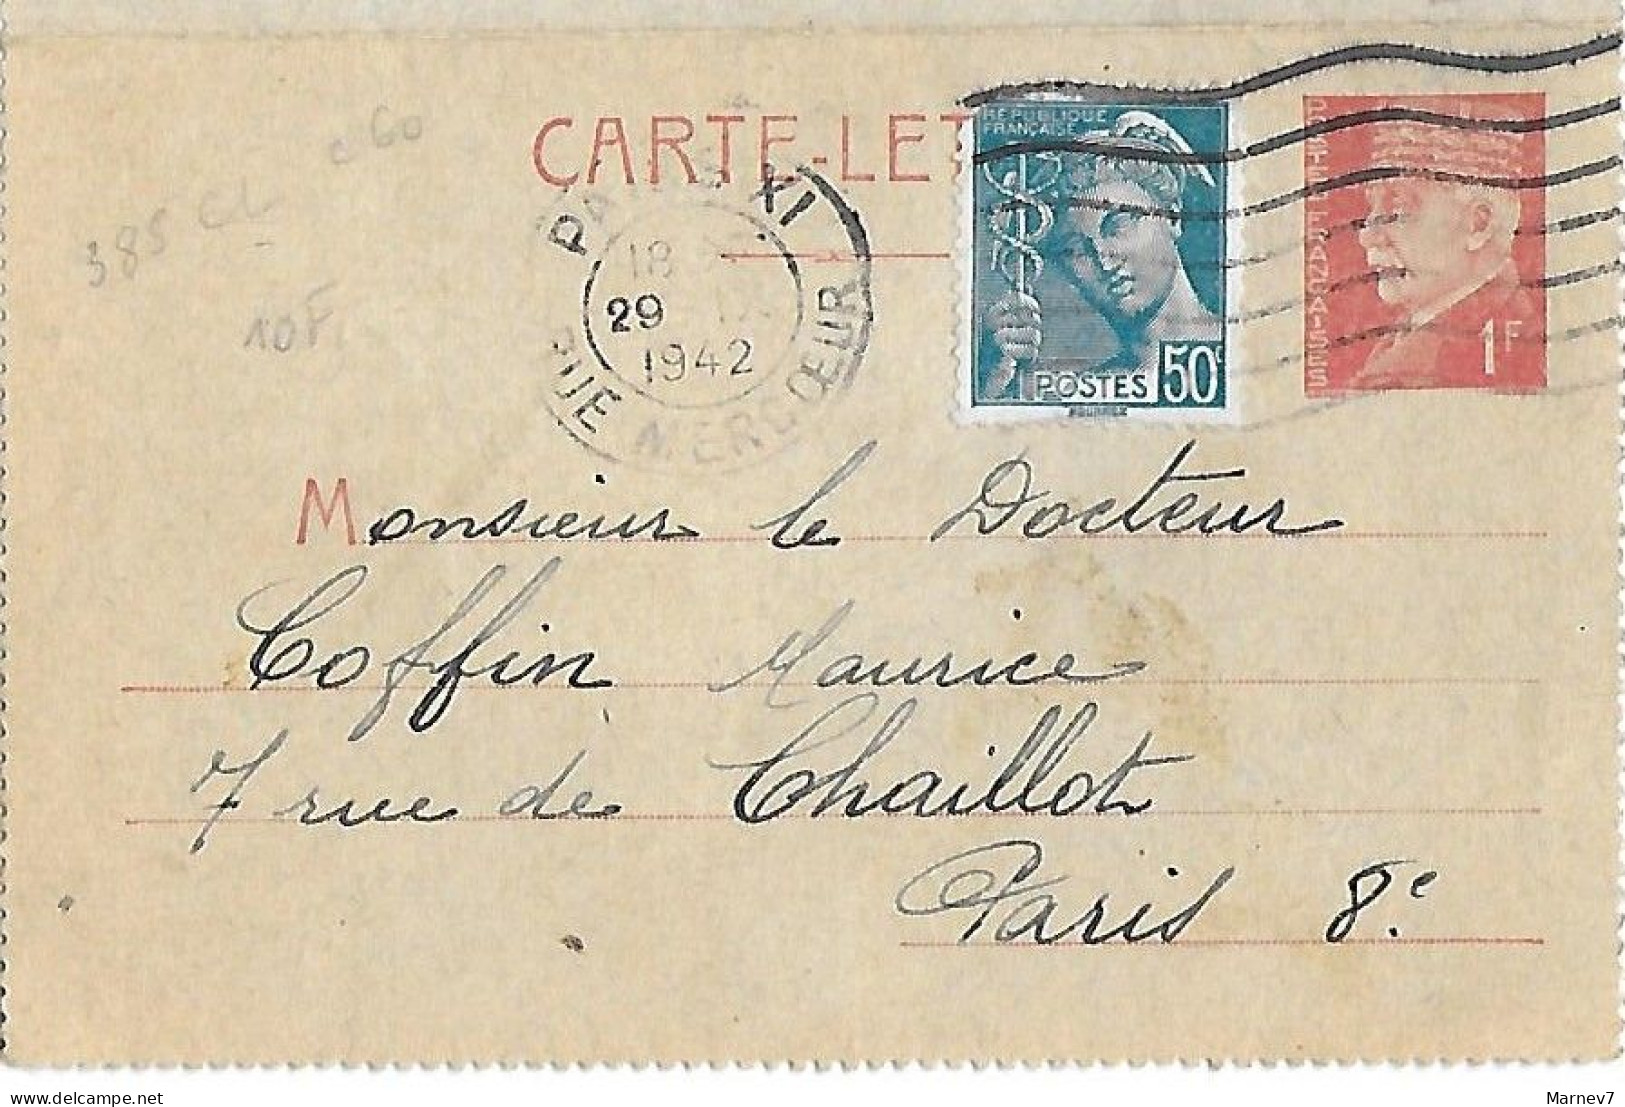 Entier - Carte-lettre 1Fr Pétain 514-CL1 - - Cad PARIS XI 29 IX 1942 - Rue Mercoeur - - Briefe U. Dokumente